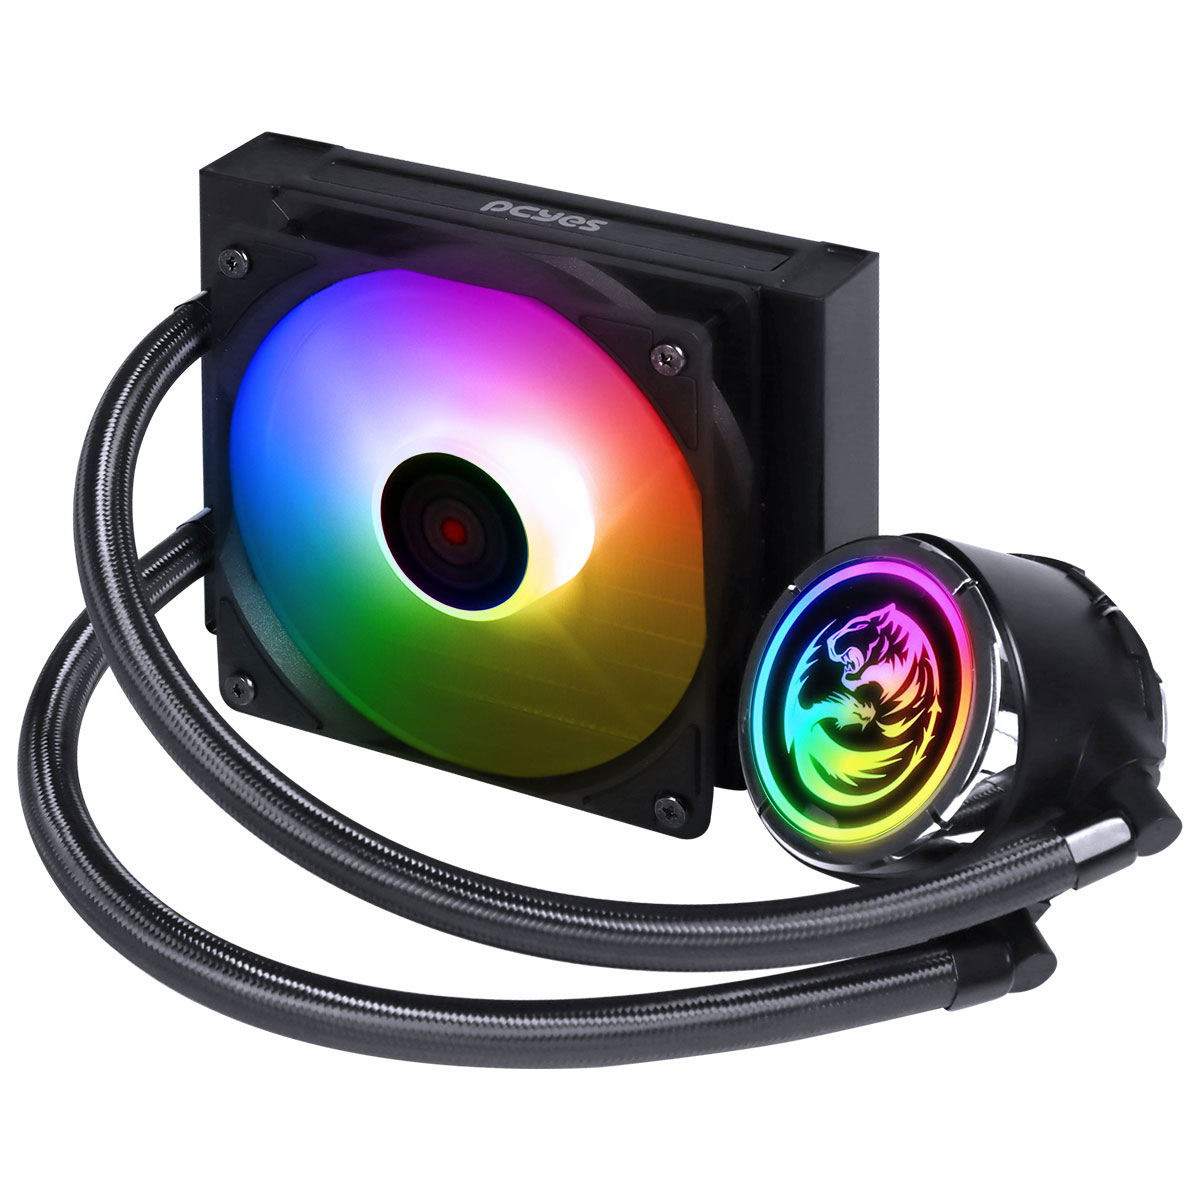 Water Cooler PCYes Nix 2 aRGB (AMD / Intel) - 120mm - Iluminação aRGB - Preto - PCYWCNIX120